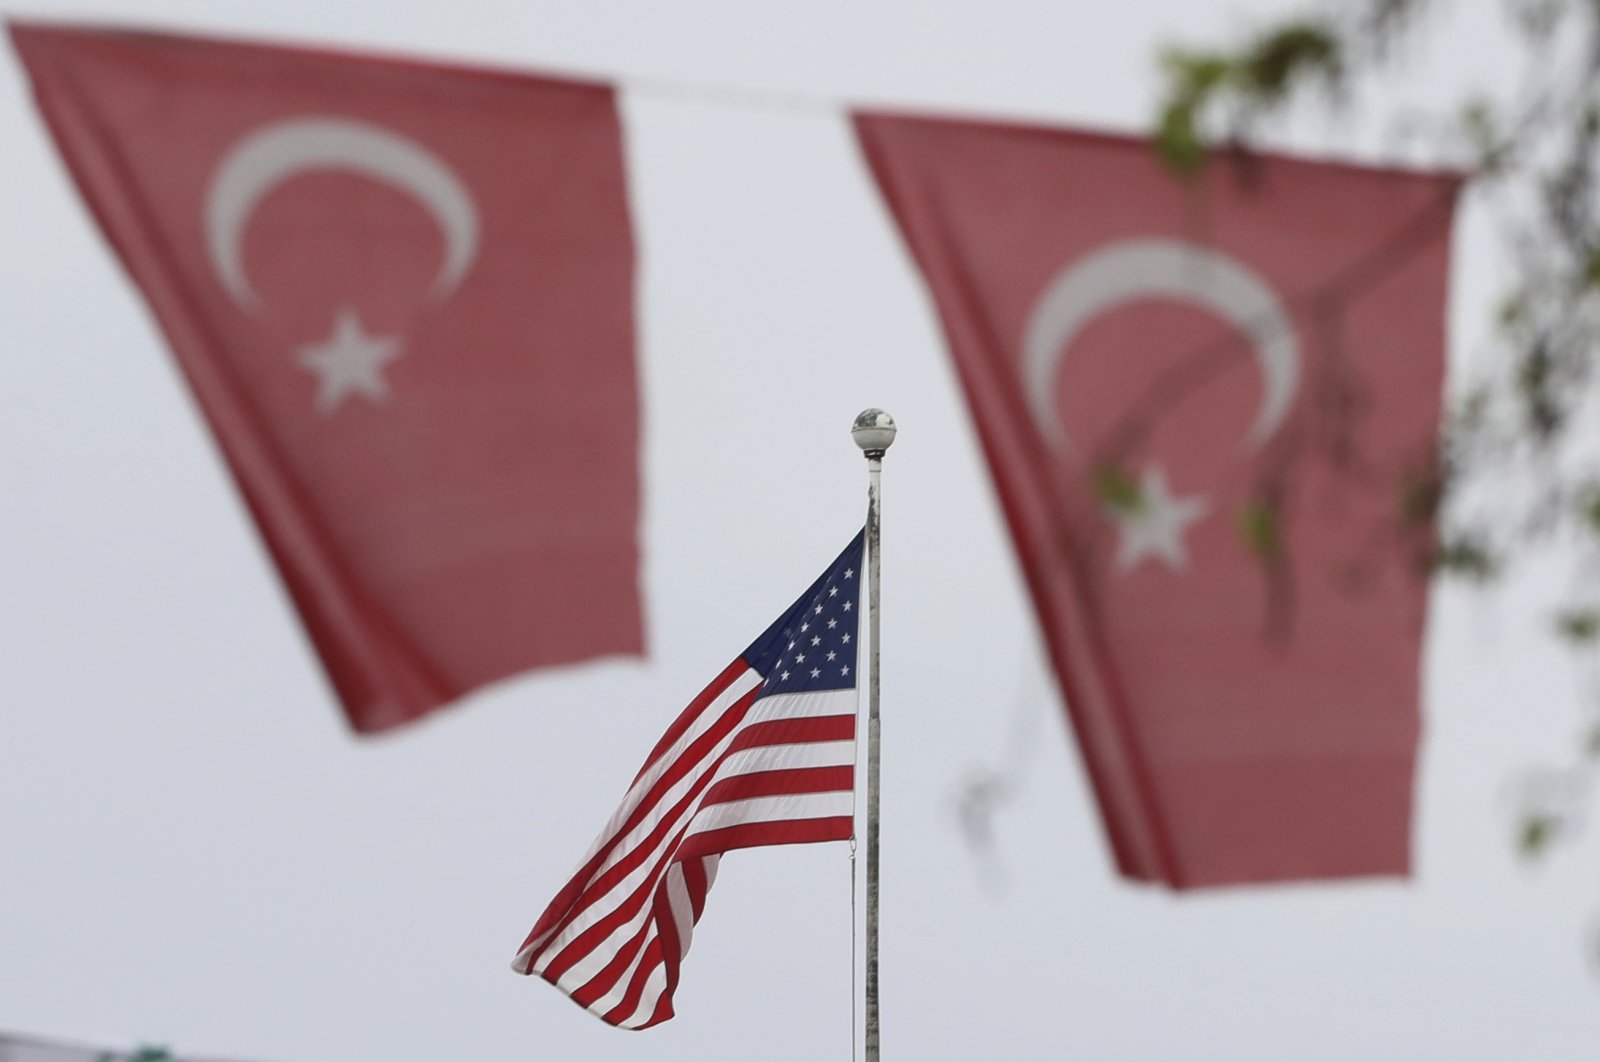 Kalin membahas hubungan Turki-AS, perkembangan global dengan Sullivan